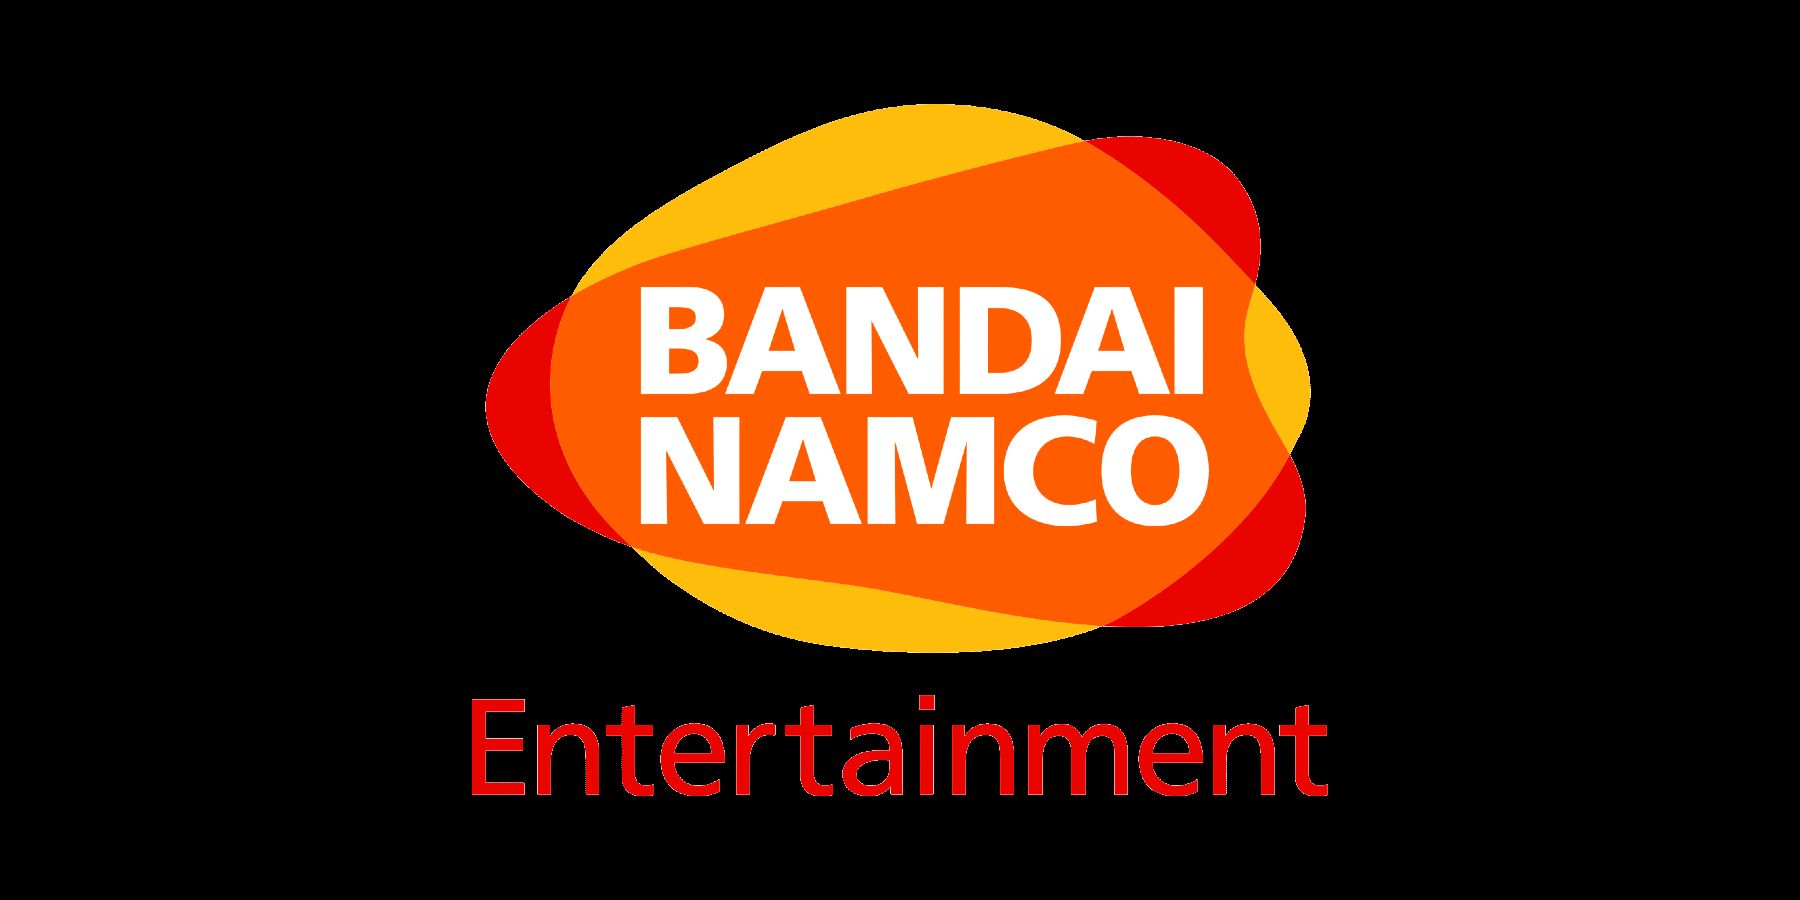 У Bandai Namco новый логотип